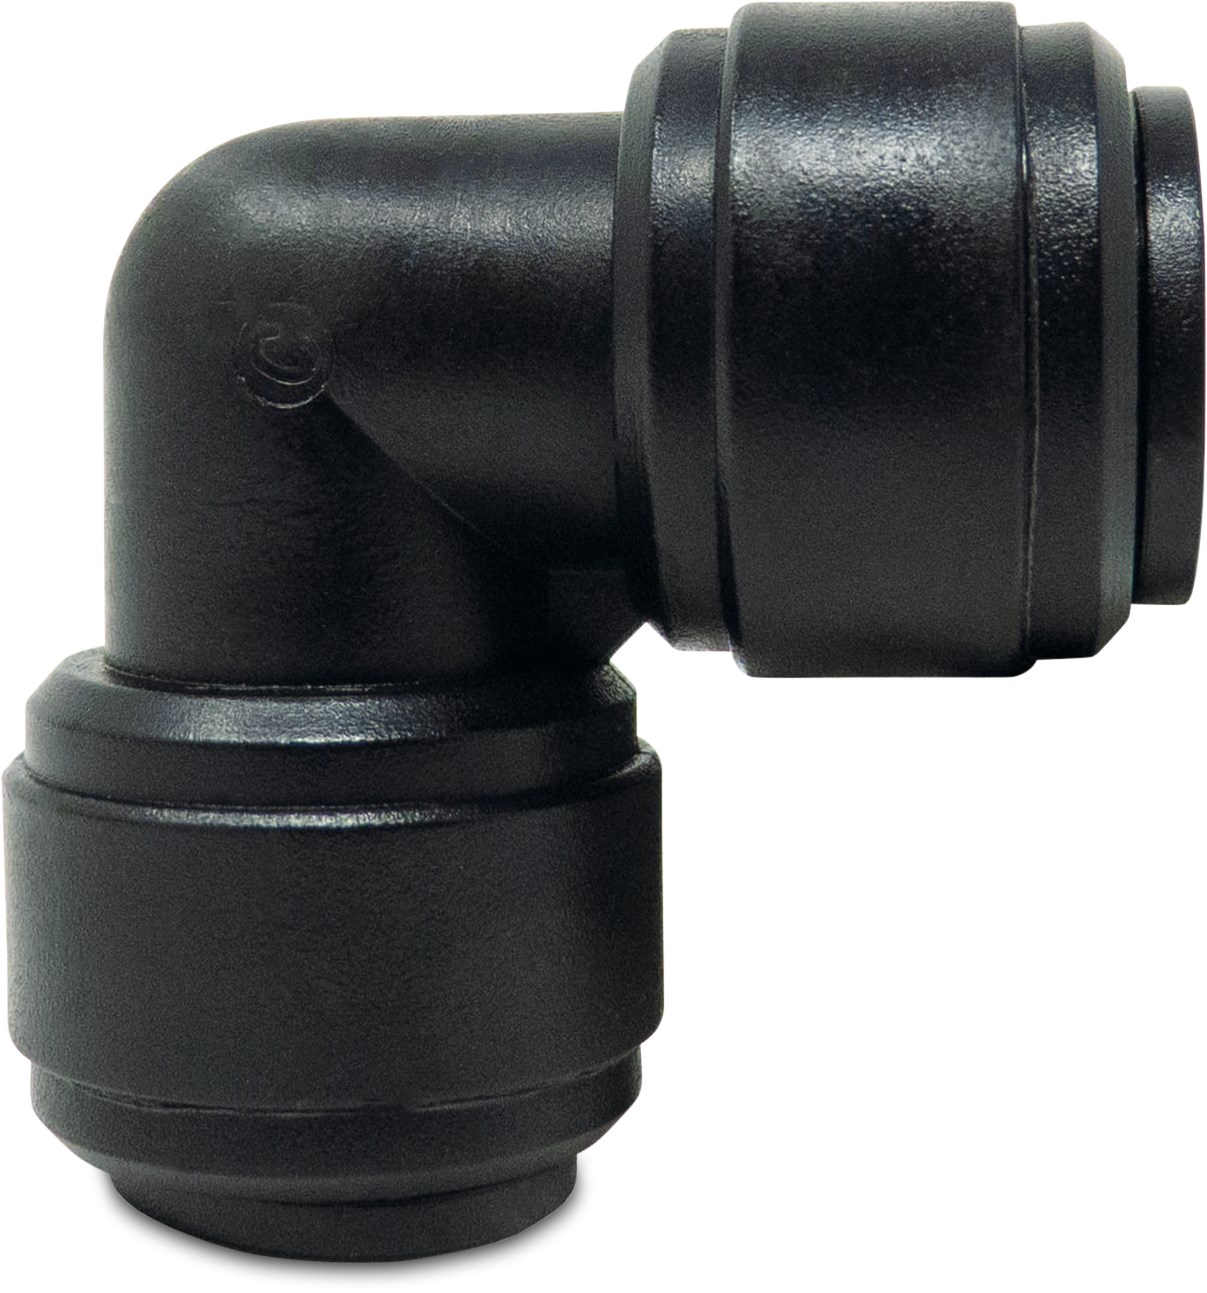 Elbow 90° POM 4 mm push-in 20bar black WRAS type Aquaspeed